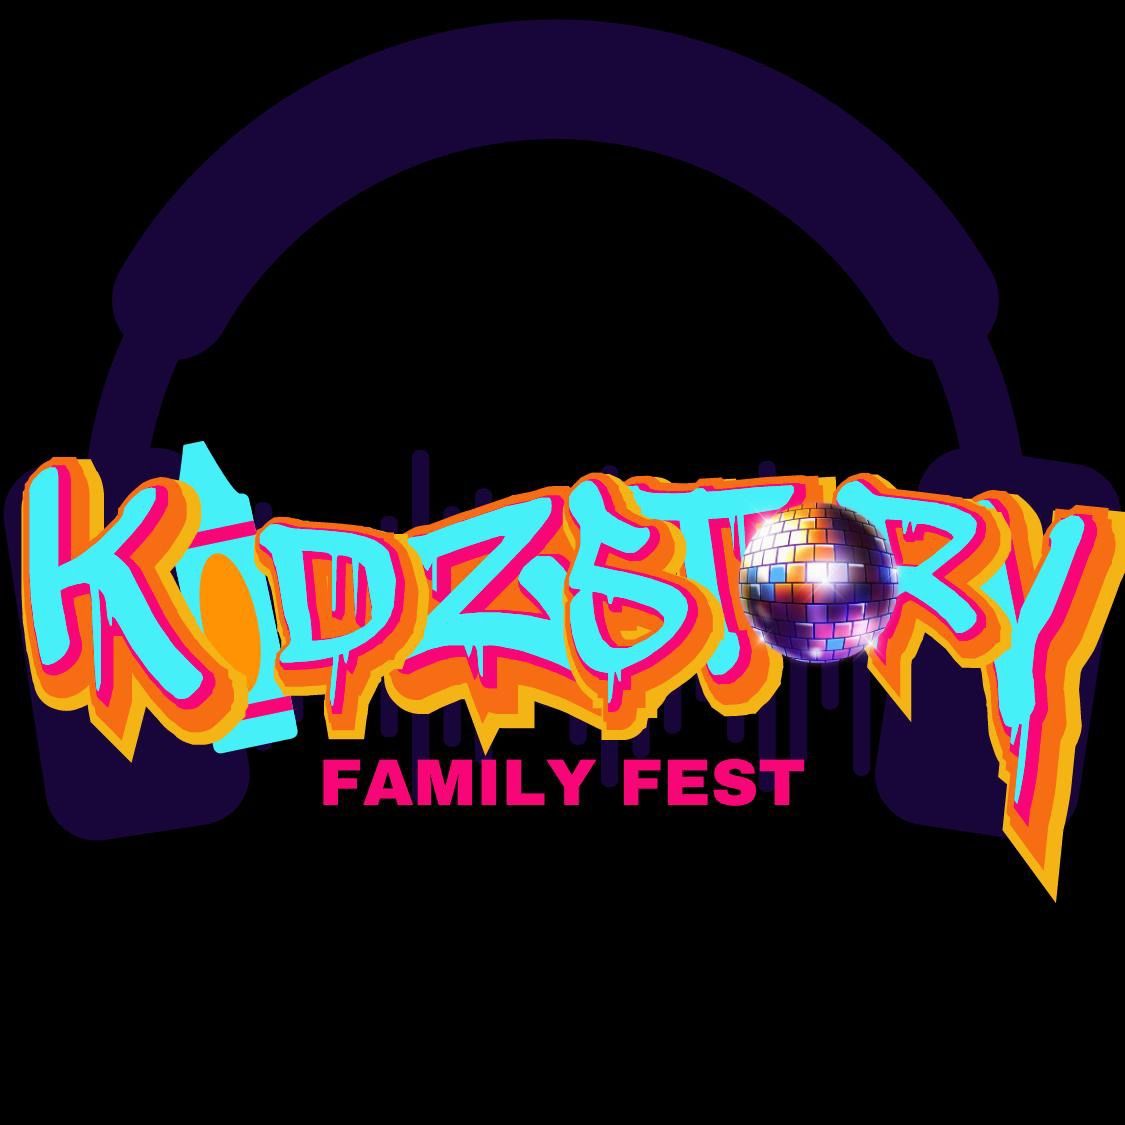 Kidztory (Family Fest) 